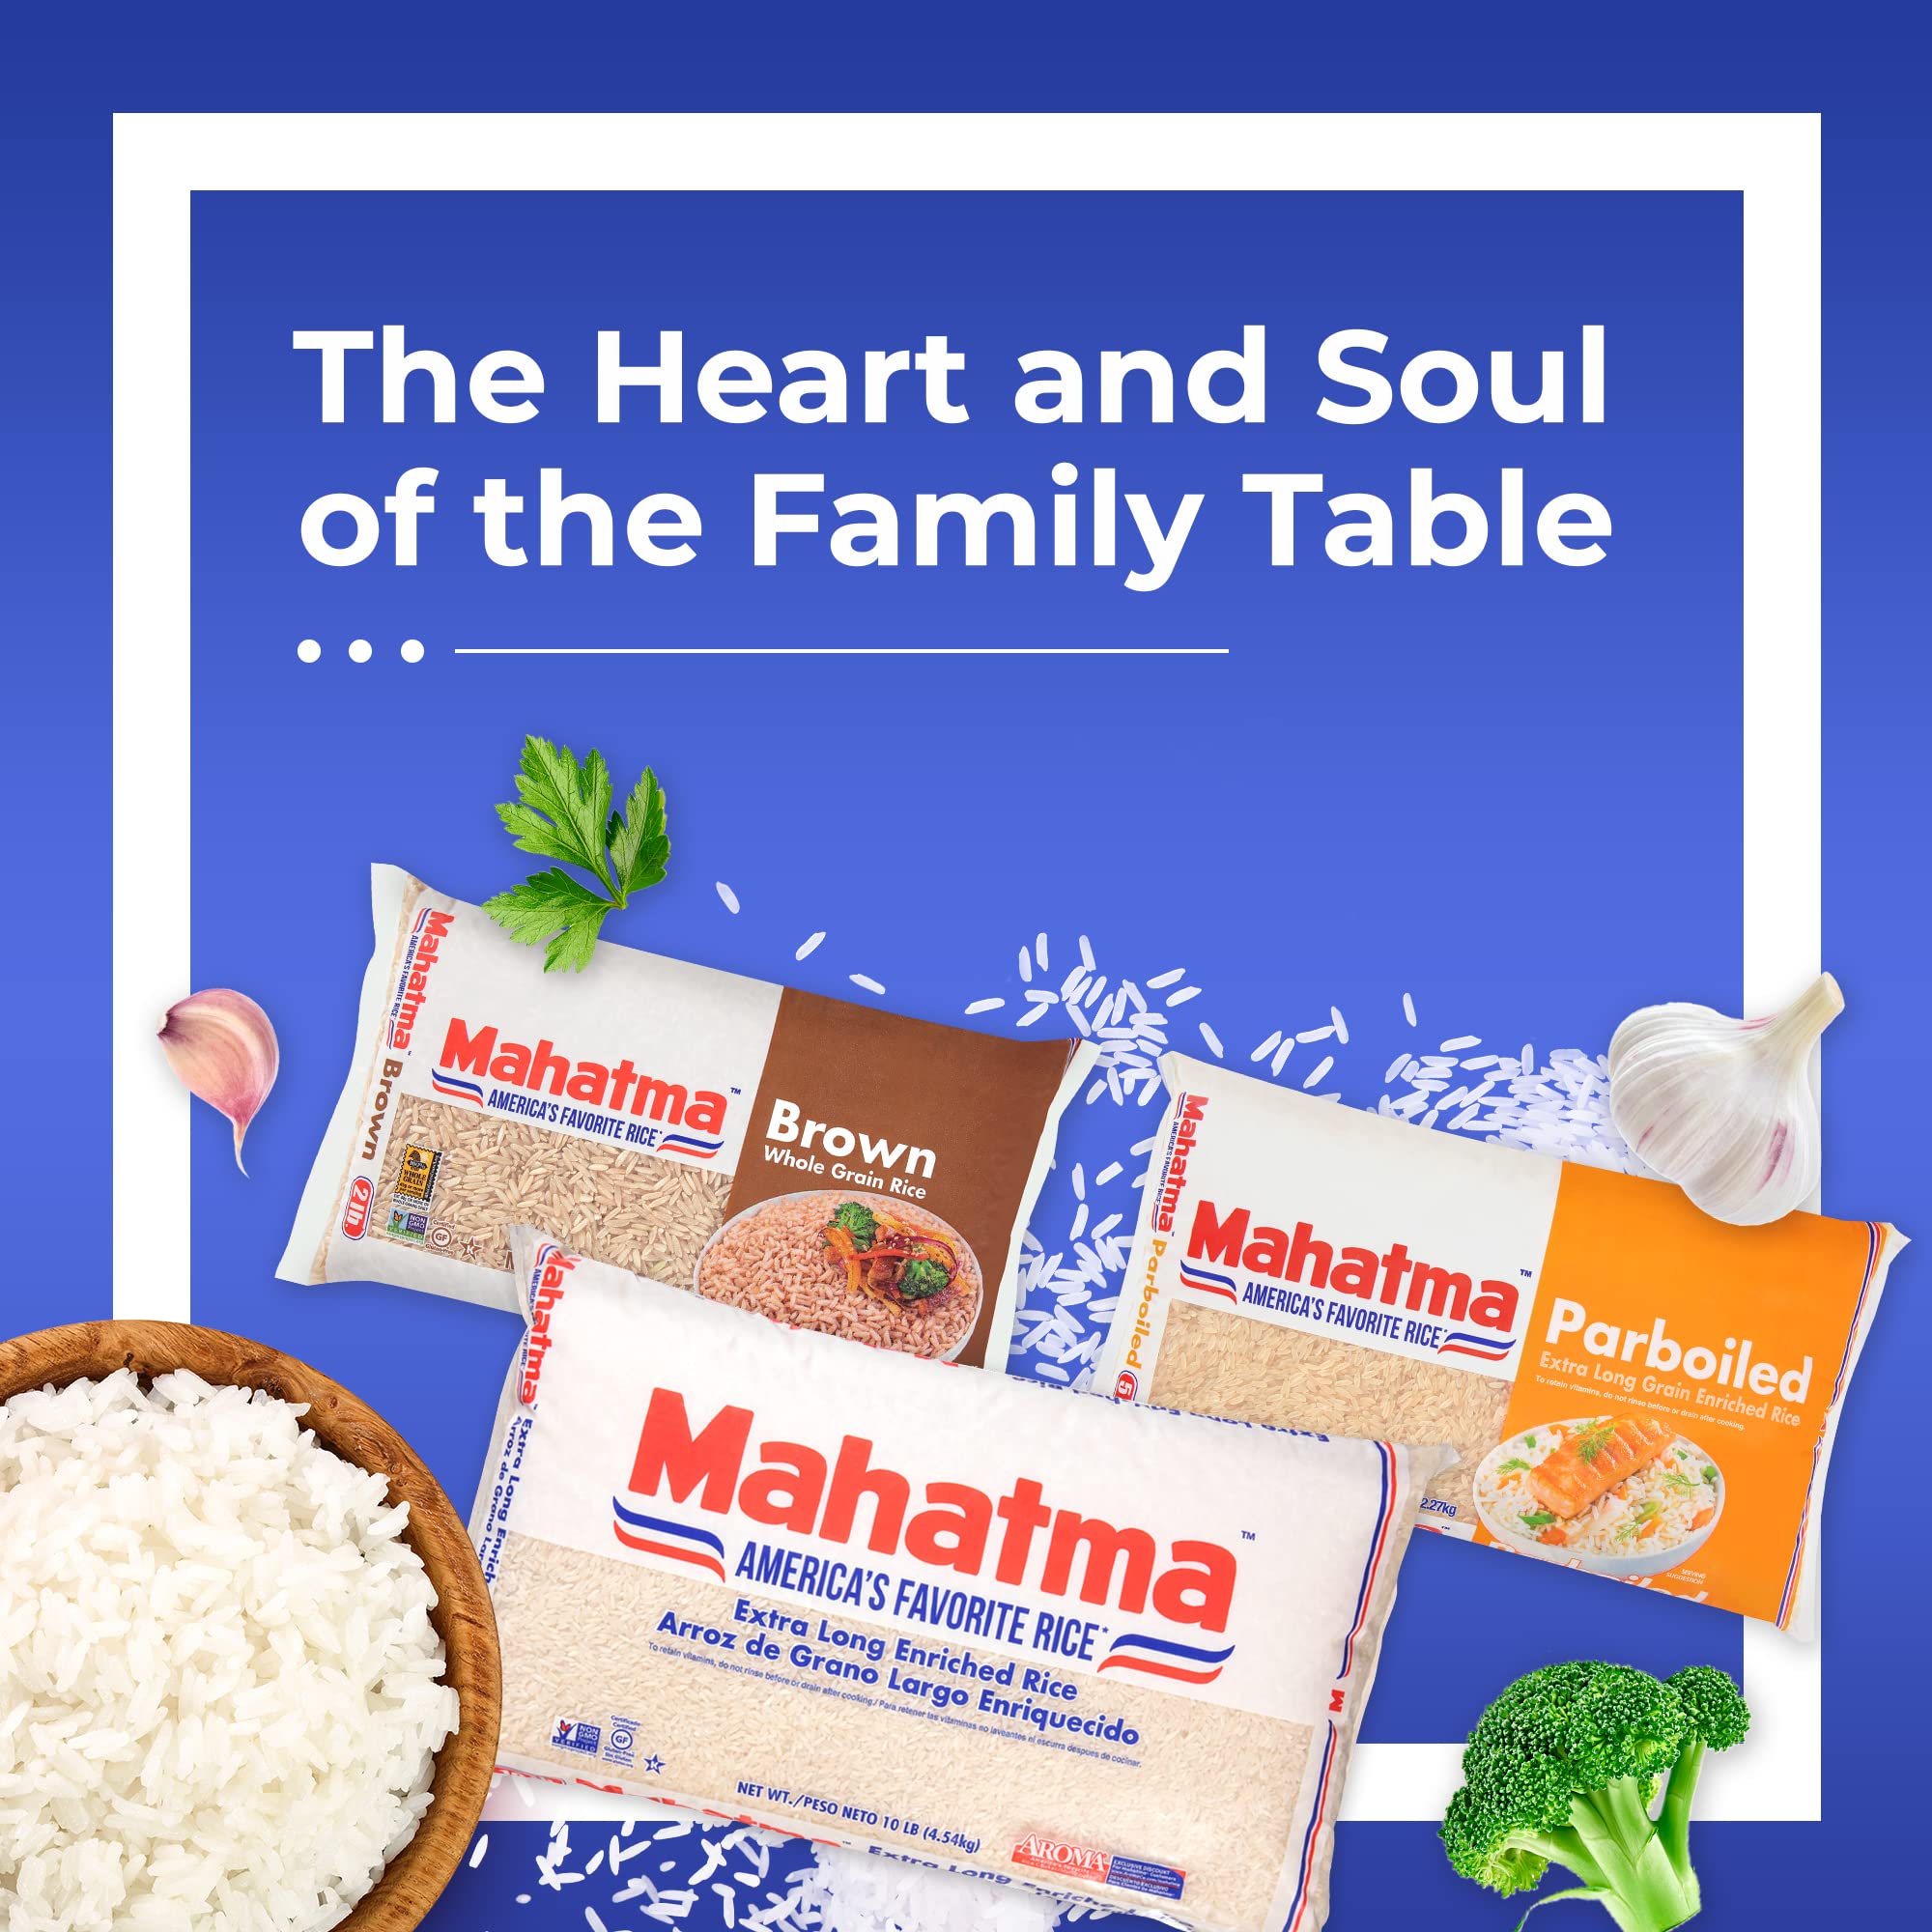 Mahatma Extra Long Grain White Rice, 10 Pound, Gluten-Free and Non-GMO, Rice Bulk Bag (Pack of 1)